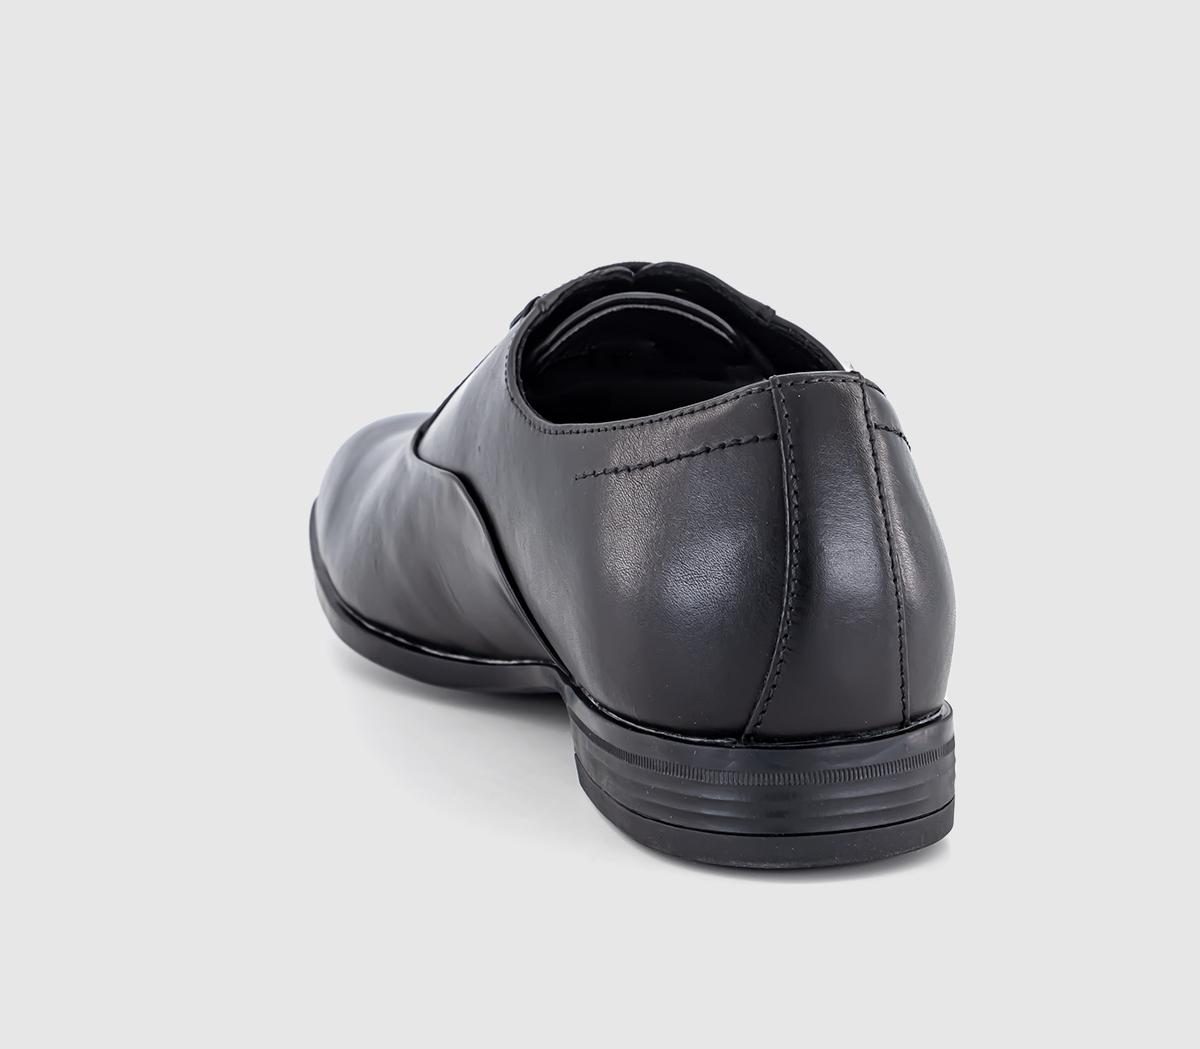 OFFICE Moreton Embossed Detail Oxford Shoes Black Leather - Men’s Smart ...